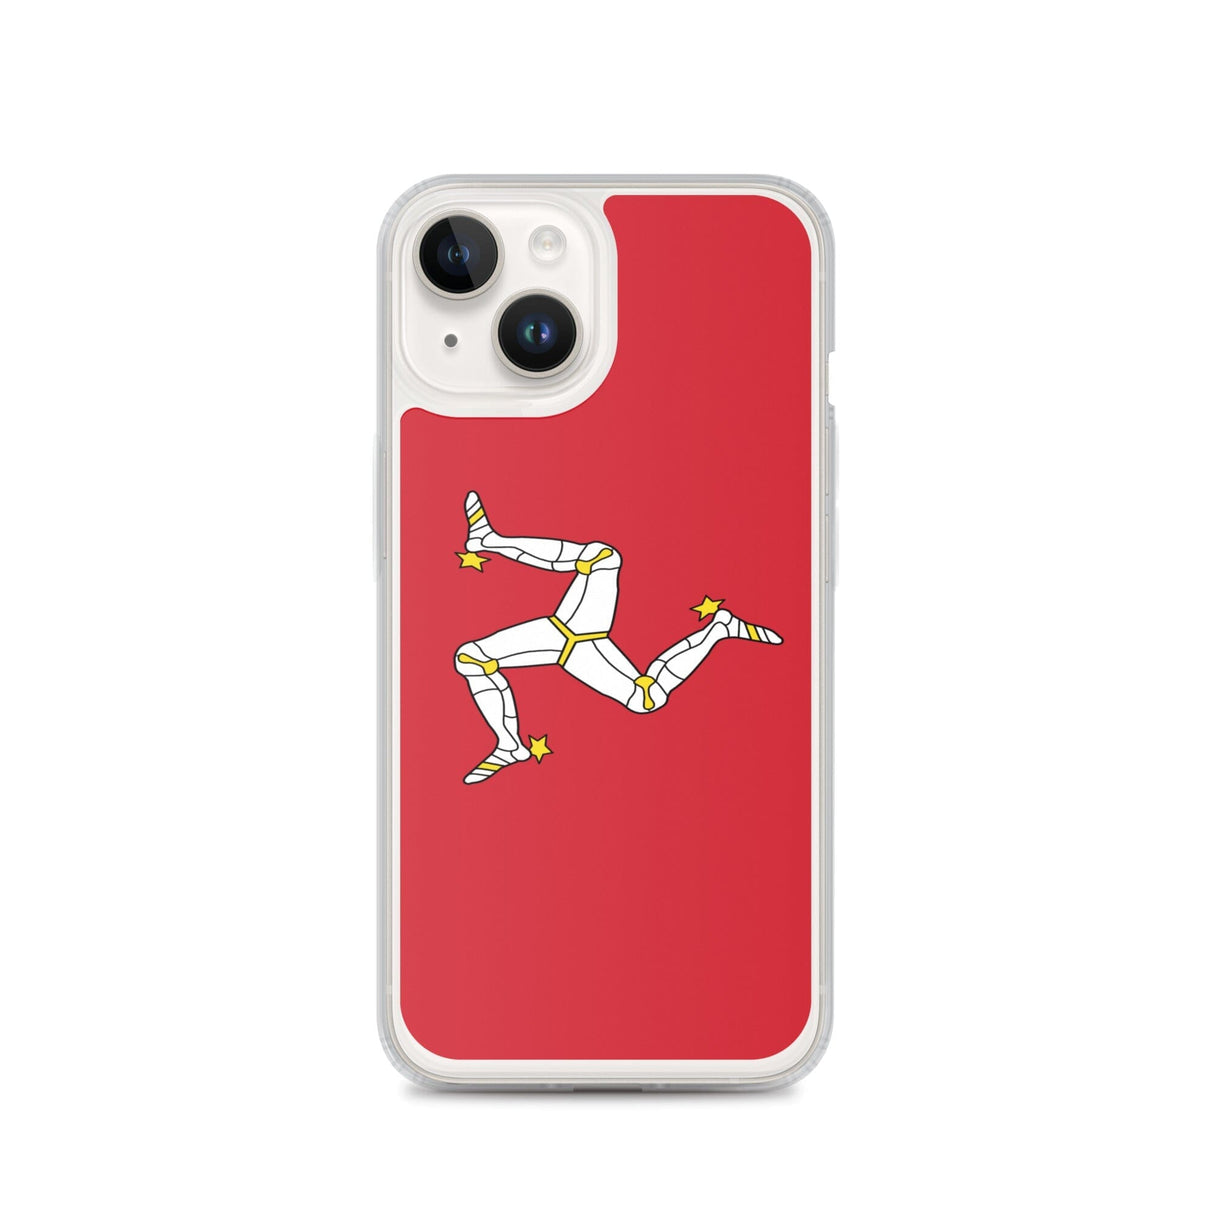 Isle of Man Flag iPhone Case - Pixelforma